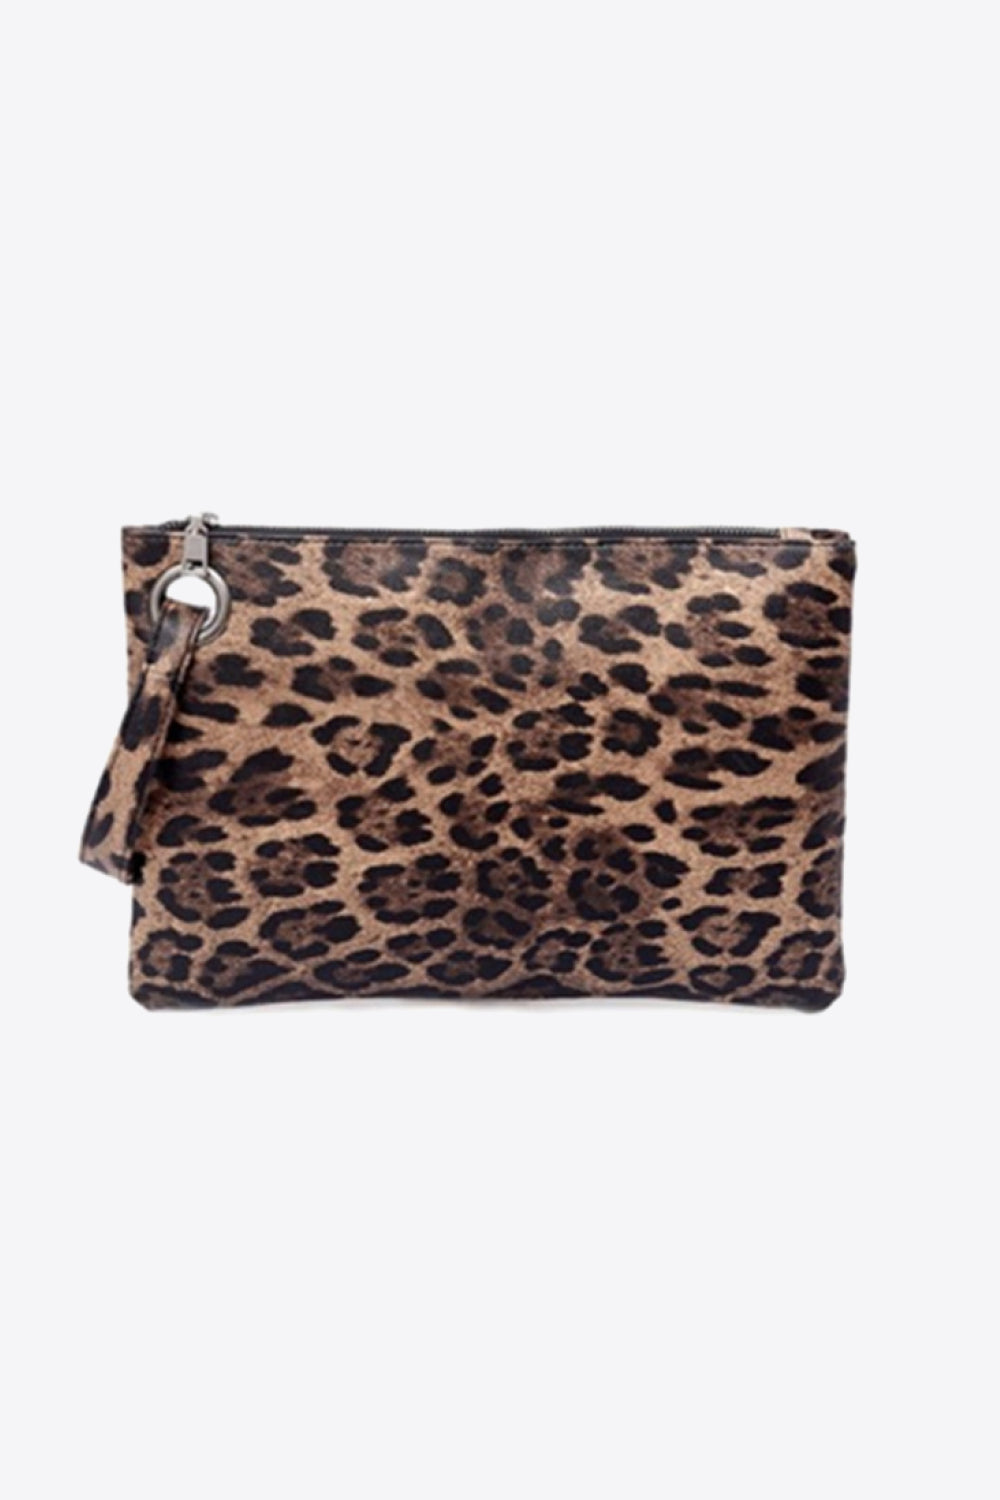 PREORDER- Leopard PU Leather Clutch